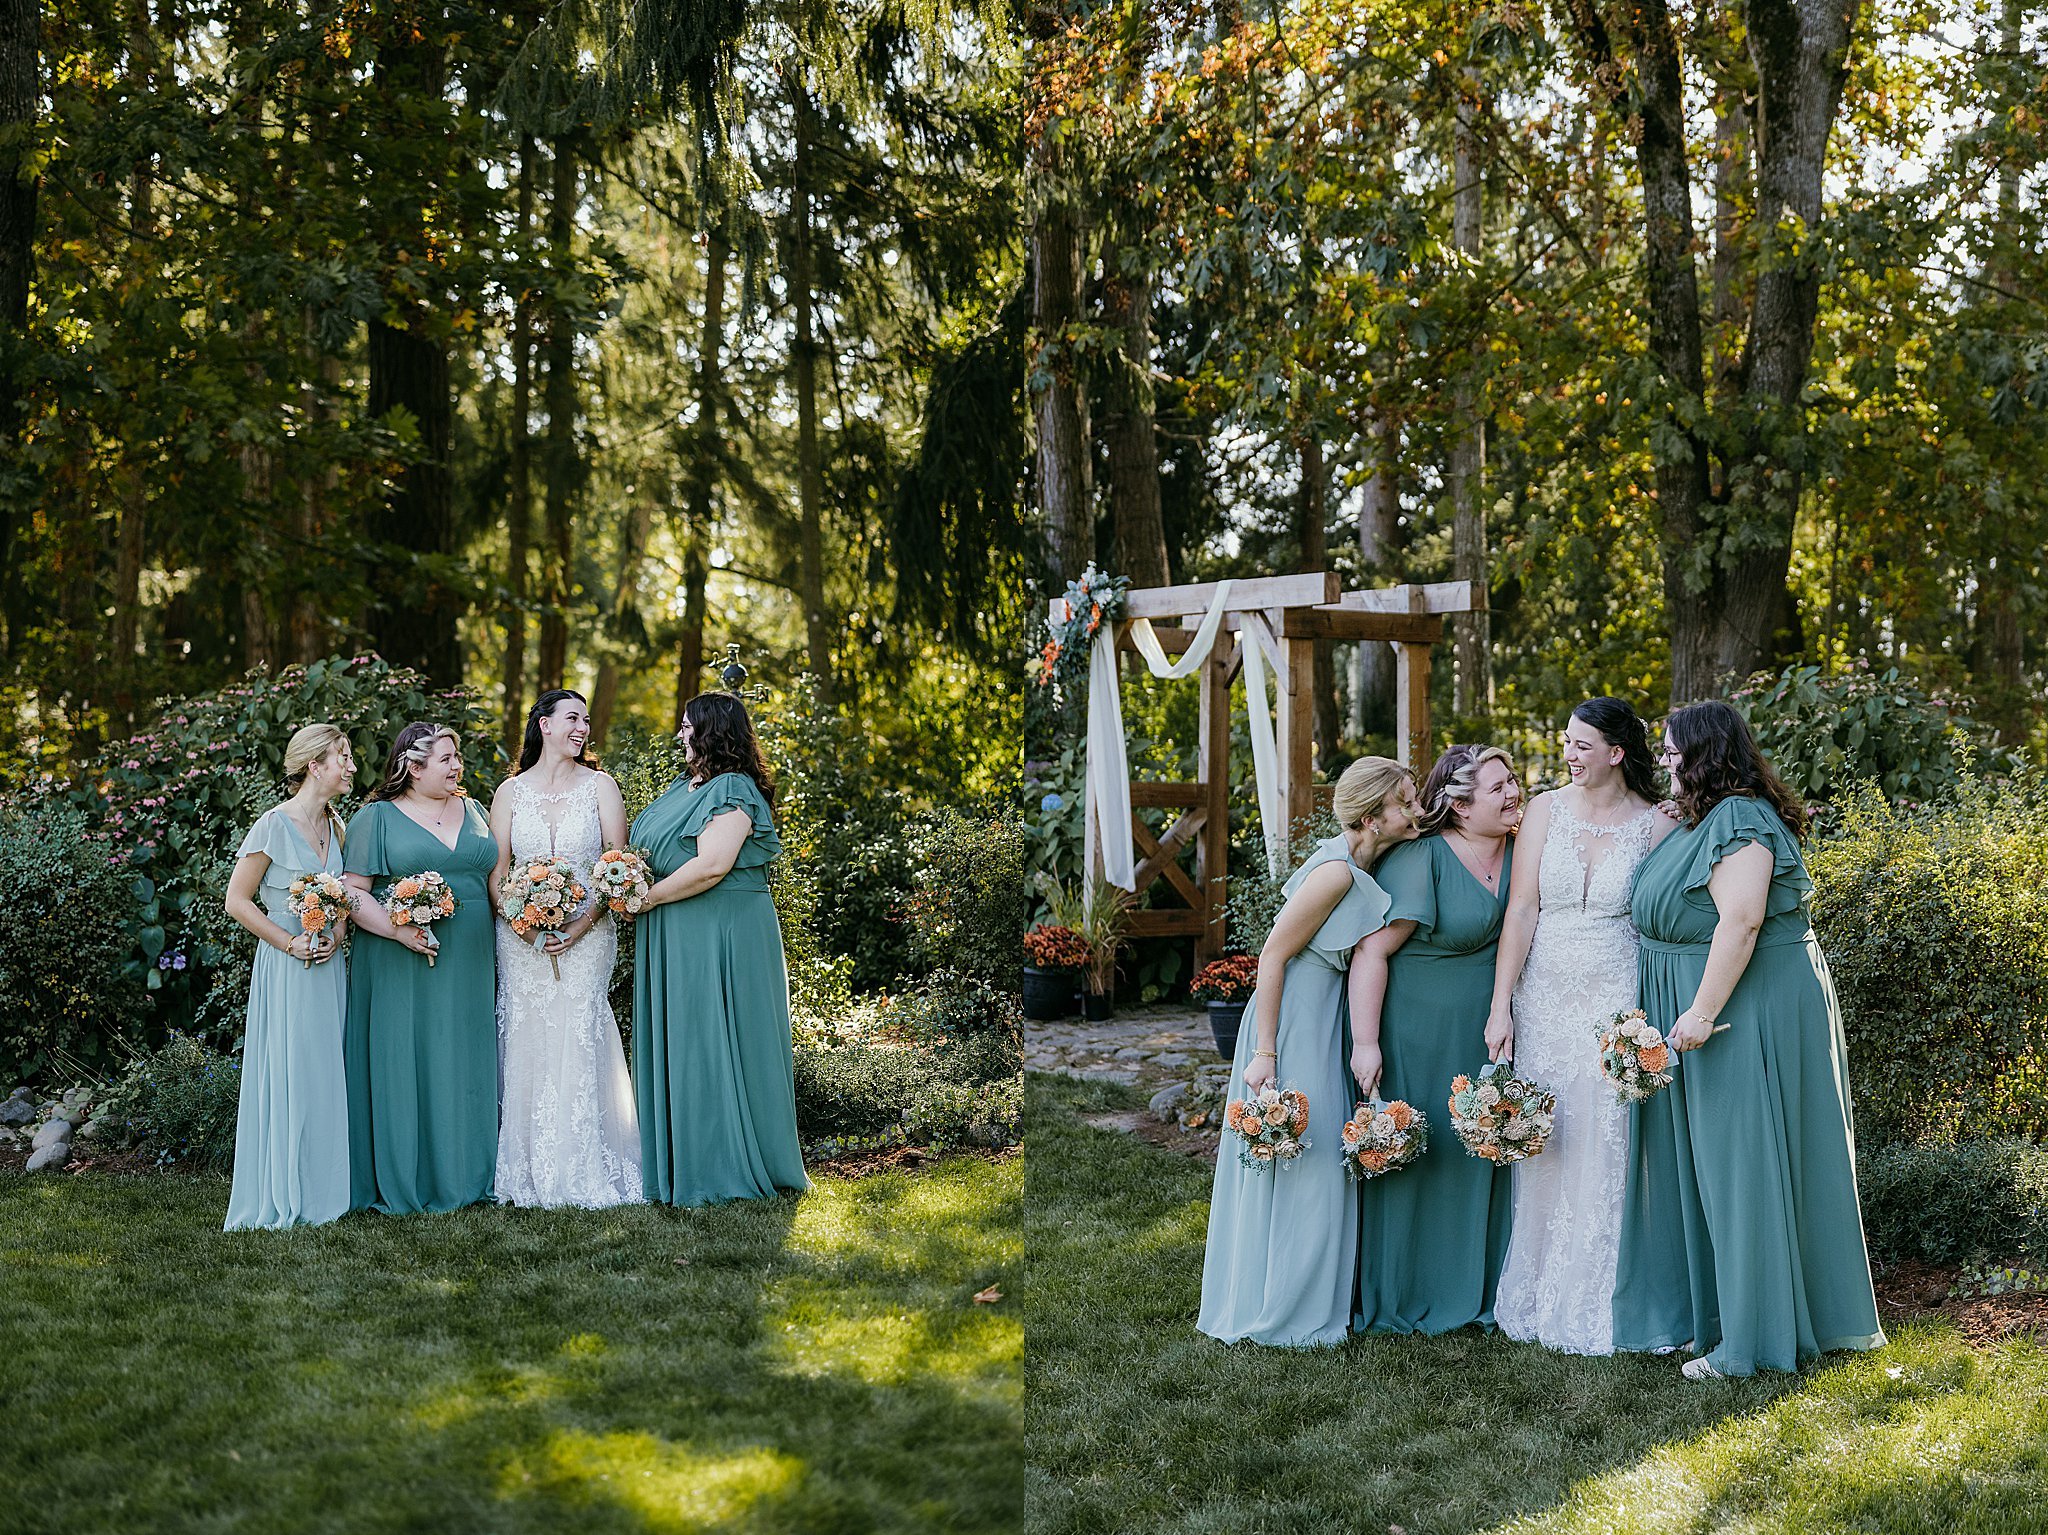 withstylePhotography_Oregon city Photographer_ Portland wedding photographer_Vanderbeck vally farms wedding_Oregon elopment Photographer0022.jpg